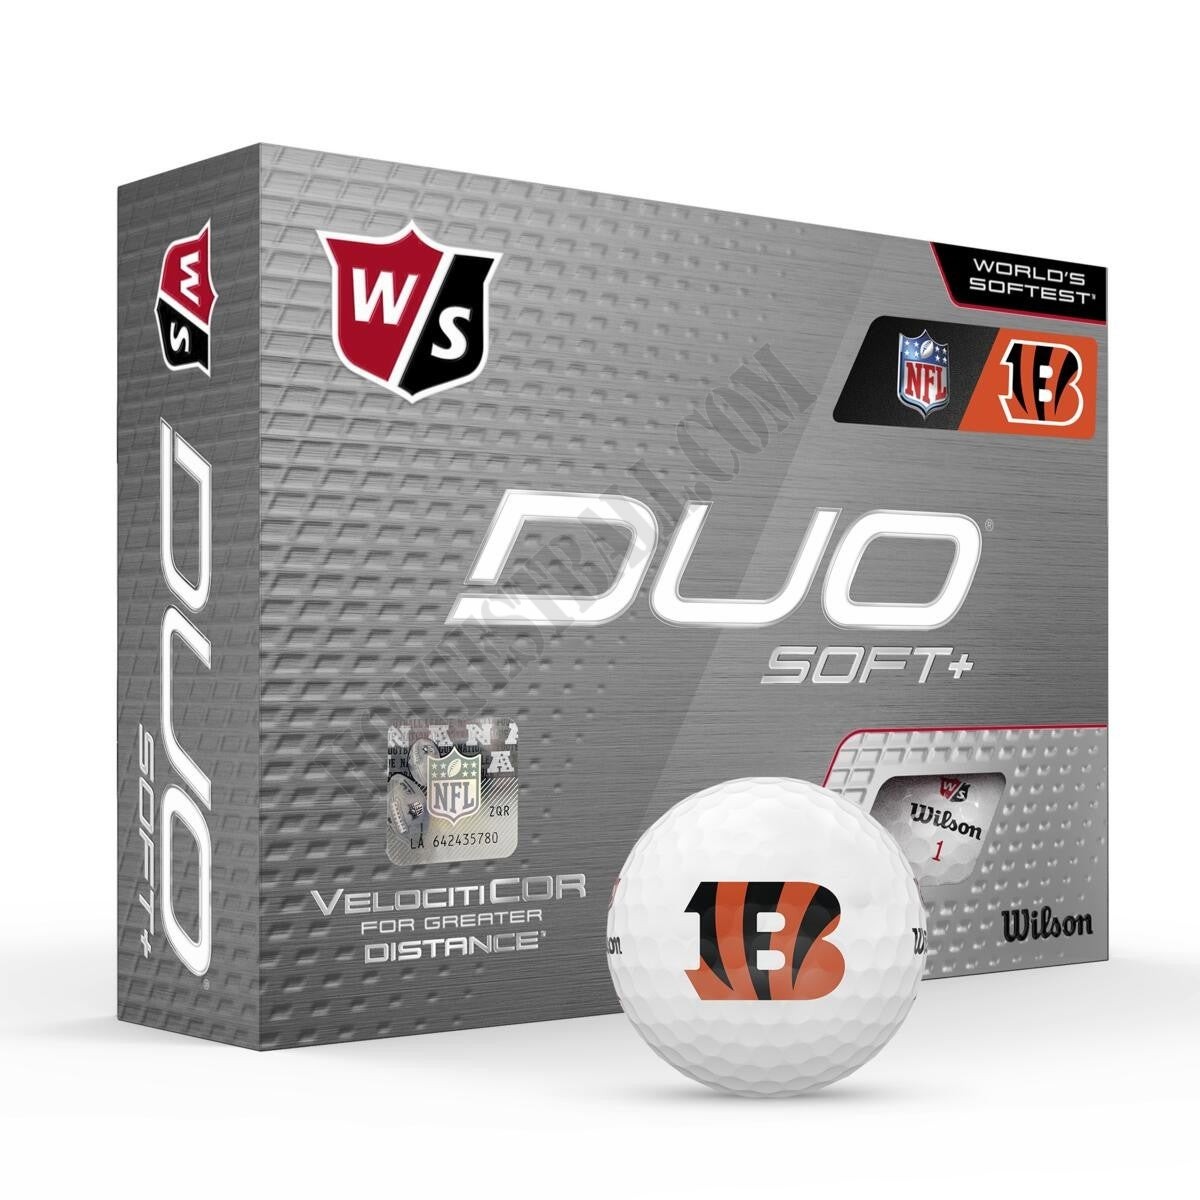 Duo Soft+ NFL Golf Balls - Cincinnati Bengals ● Wilson Promotions - -0